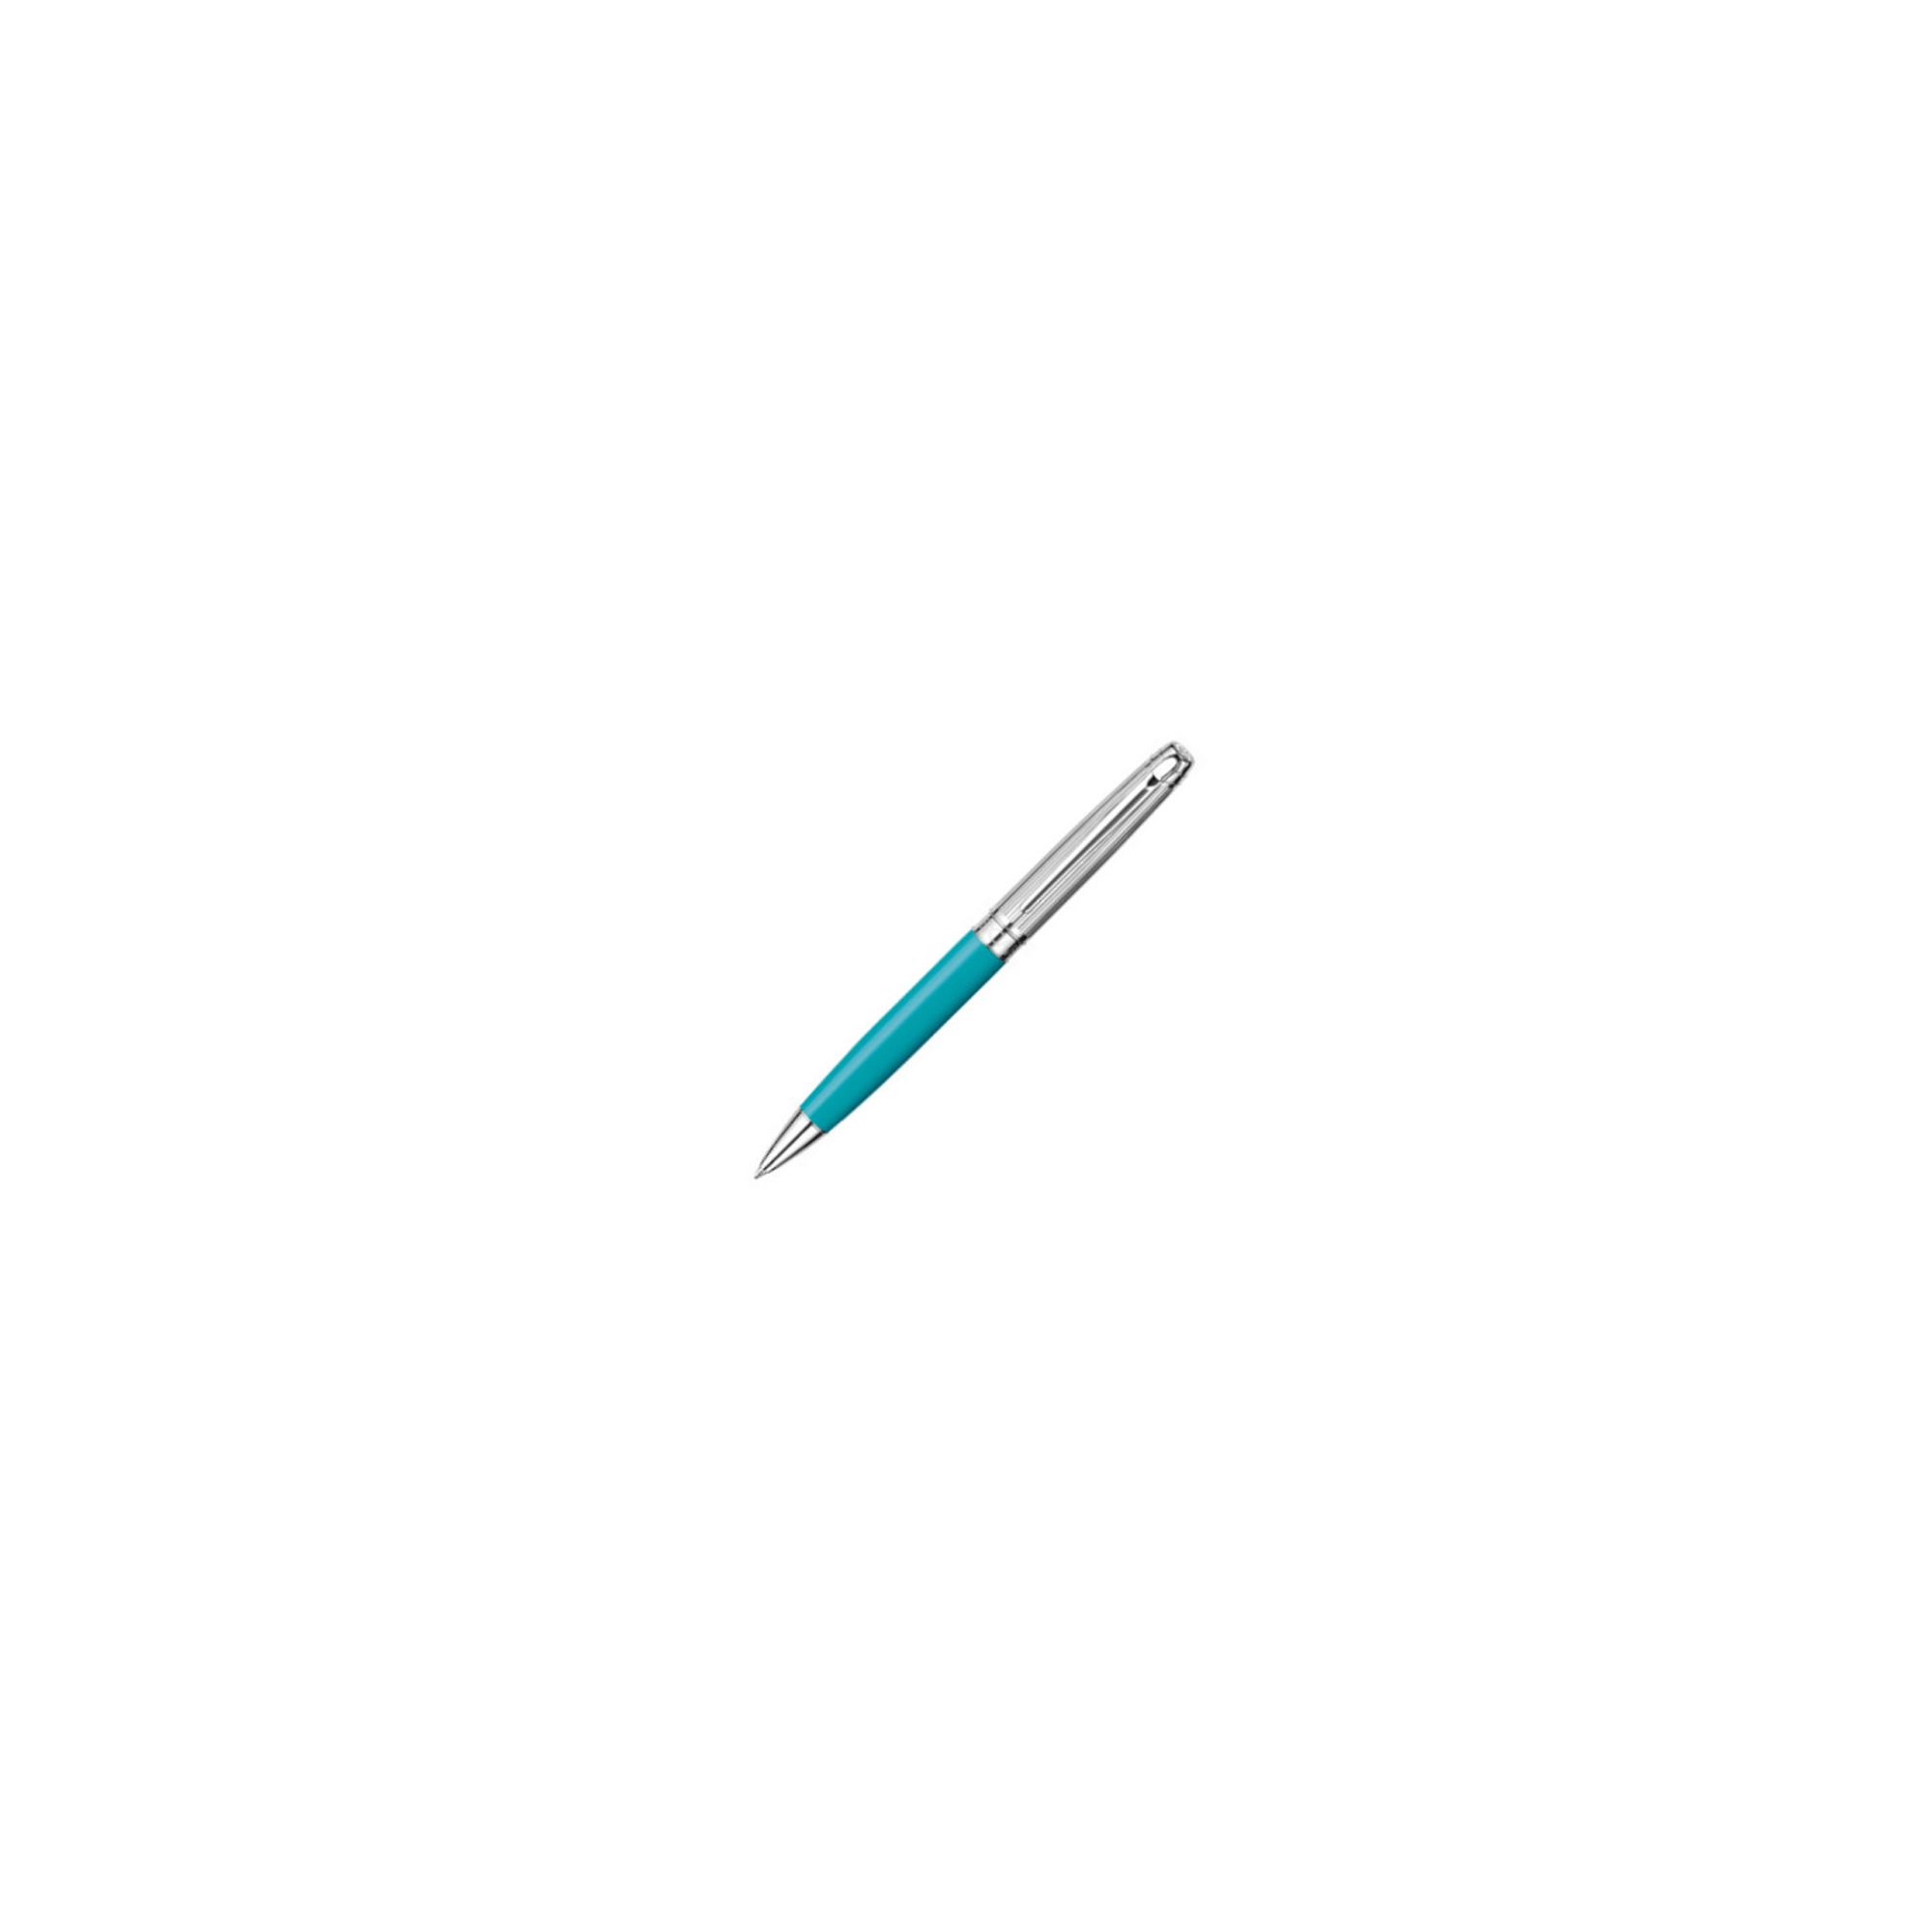 Caran d'Ache Leman Bi Colour Turquoise Ballpoint Pen at Tesco Direct